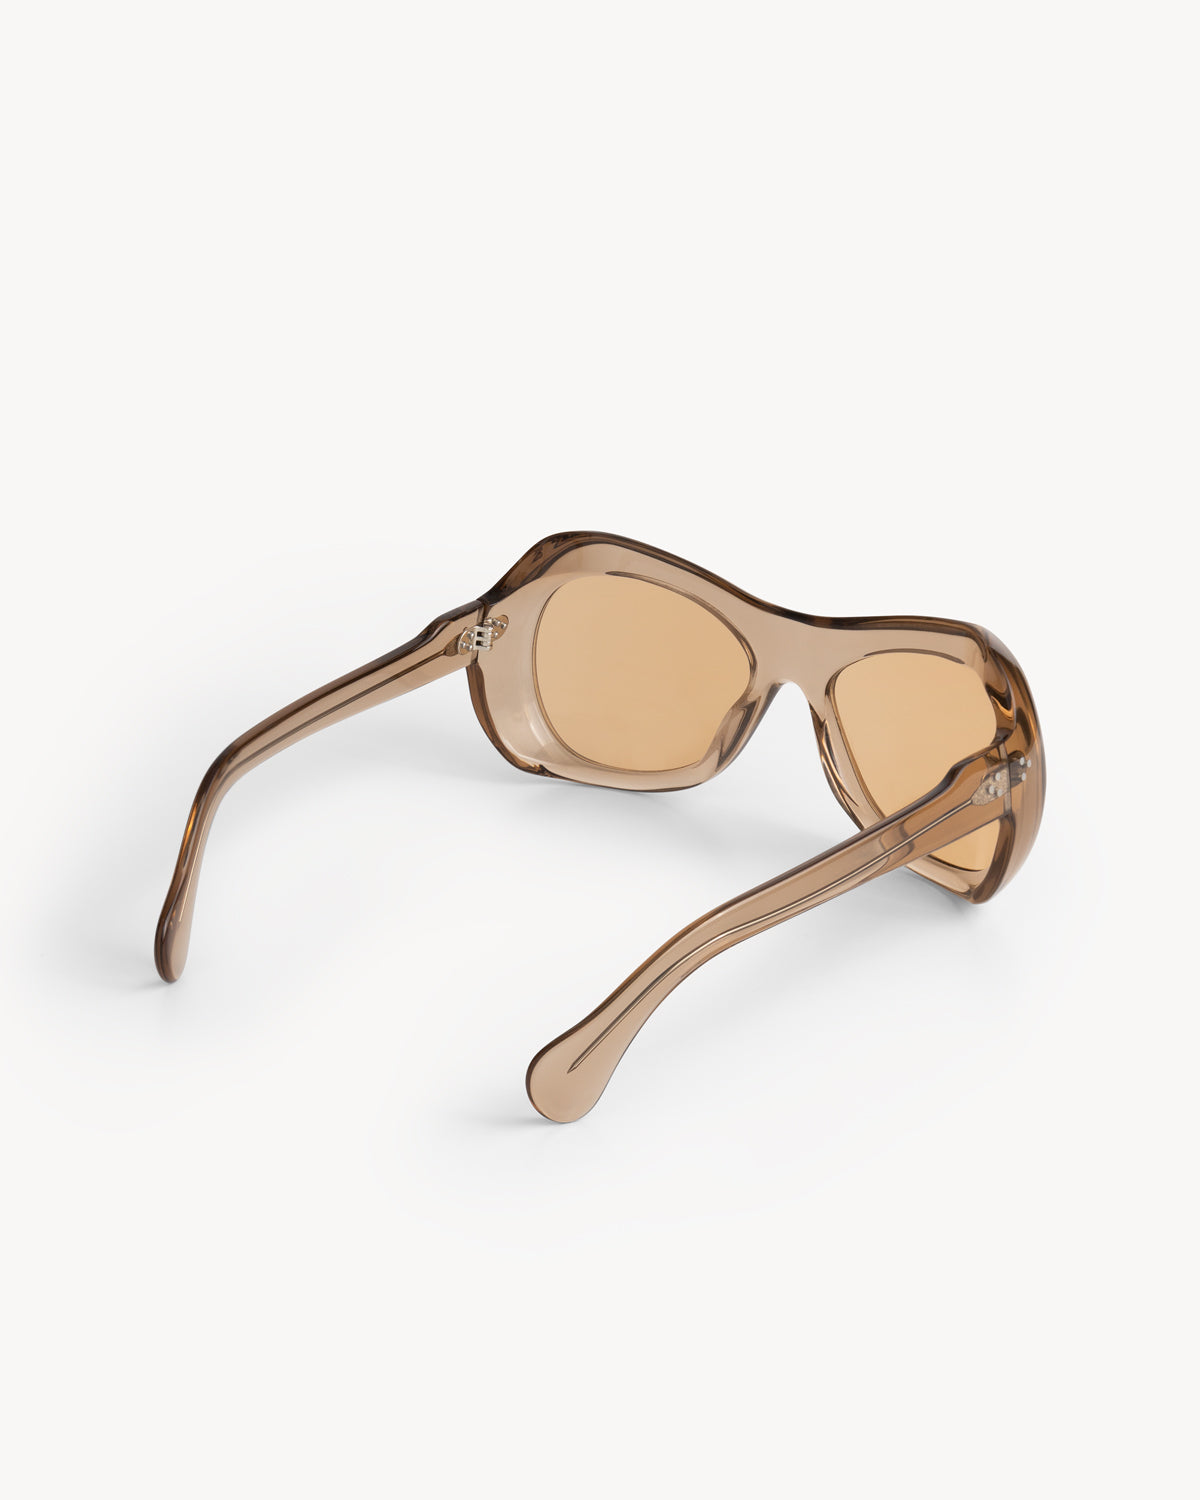 Port Tanger Soledad Sunglasses in Honey Acetate and Amber Lenses 3